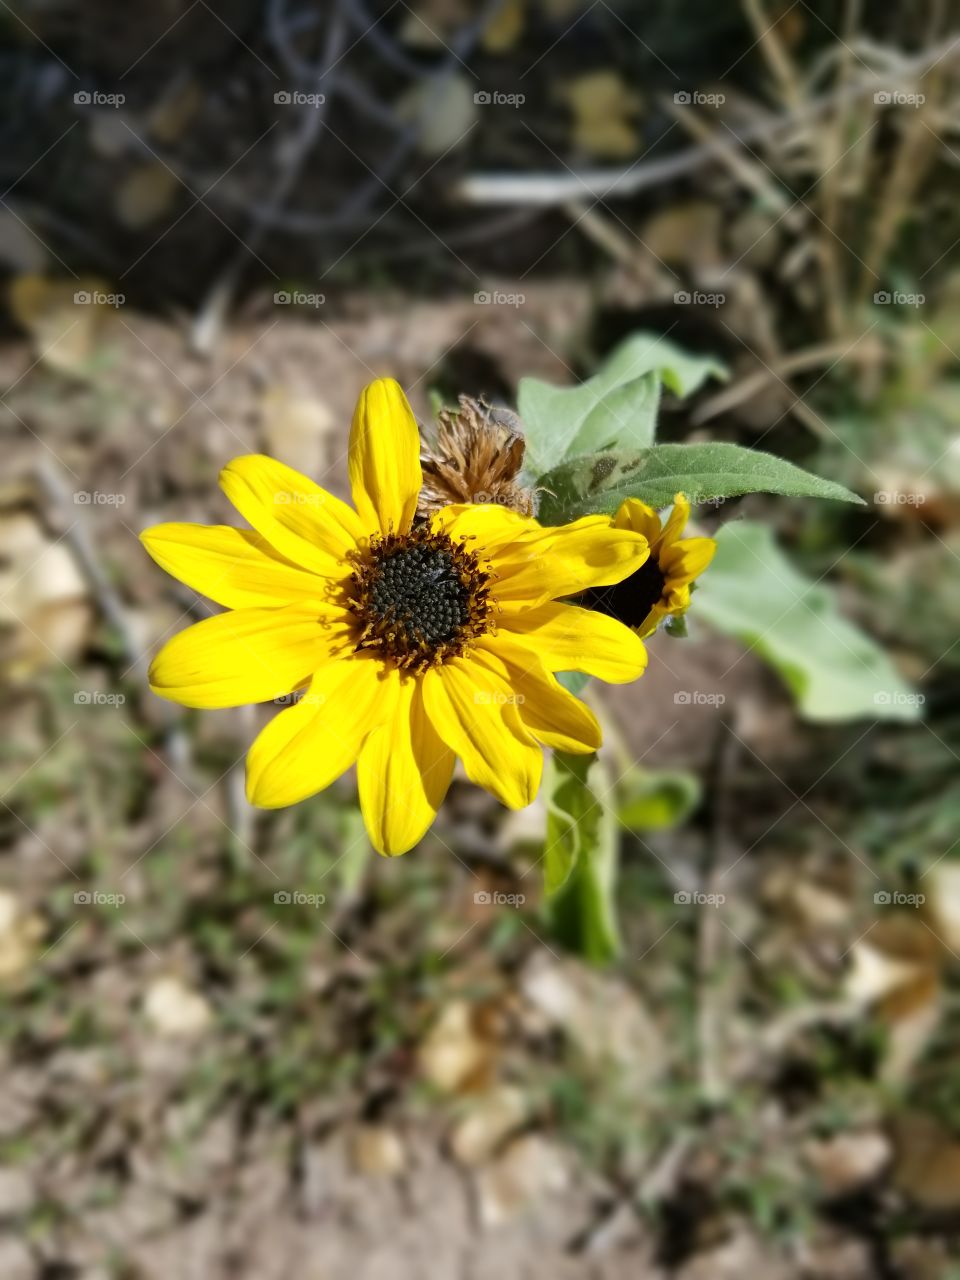 last sunflower standing